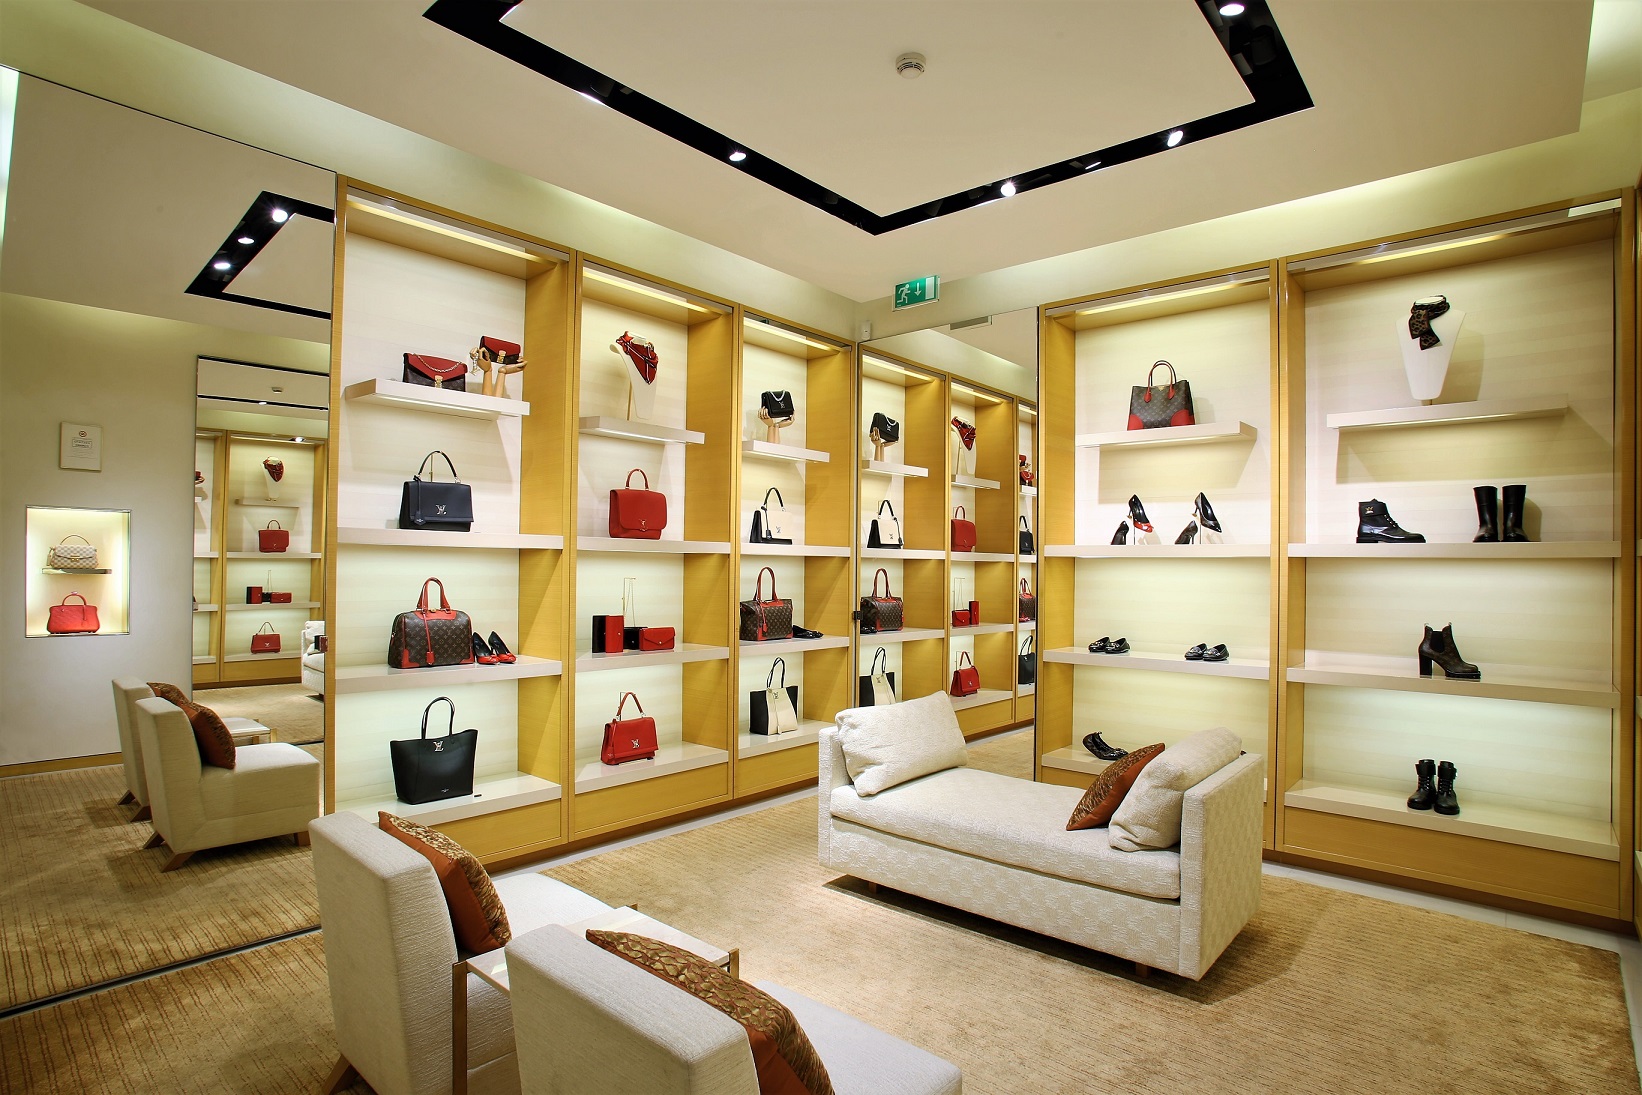 Louis Vuitton, Jewelry, Louis Vuitton Lv Crown Reversible Bracelet  Monogram Canvas And Leather Brown